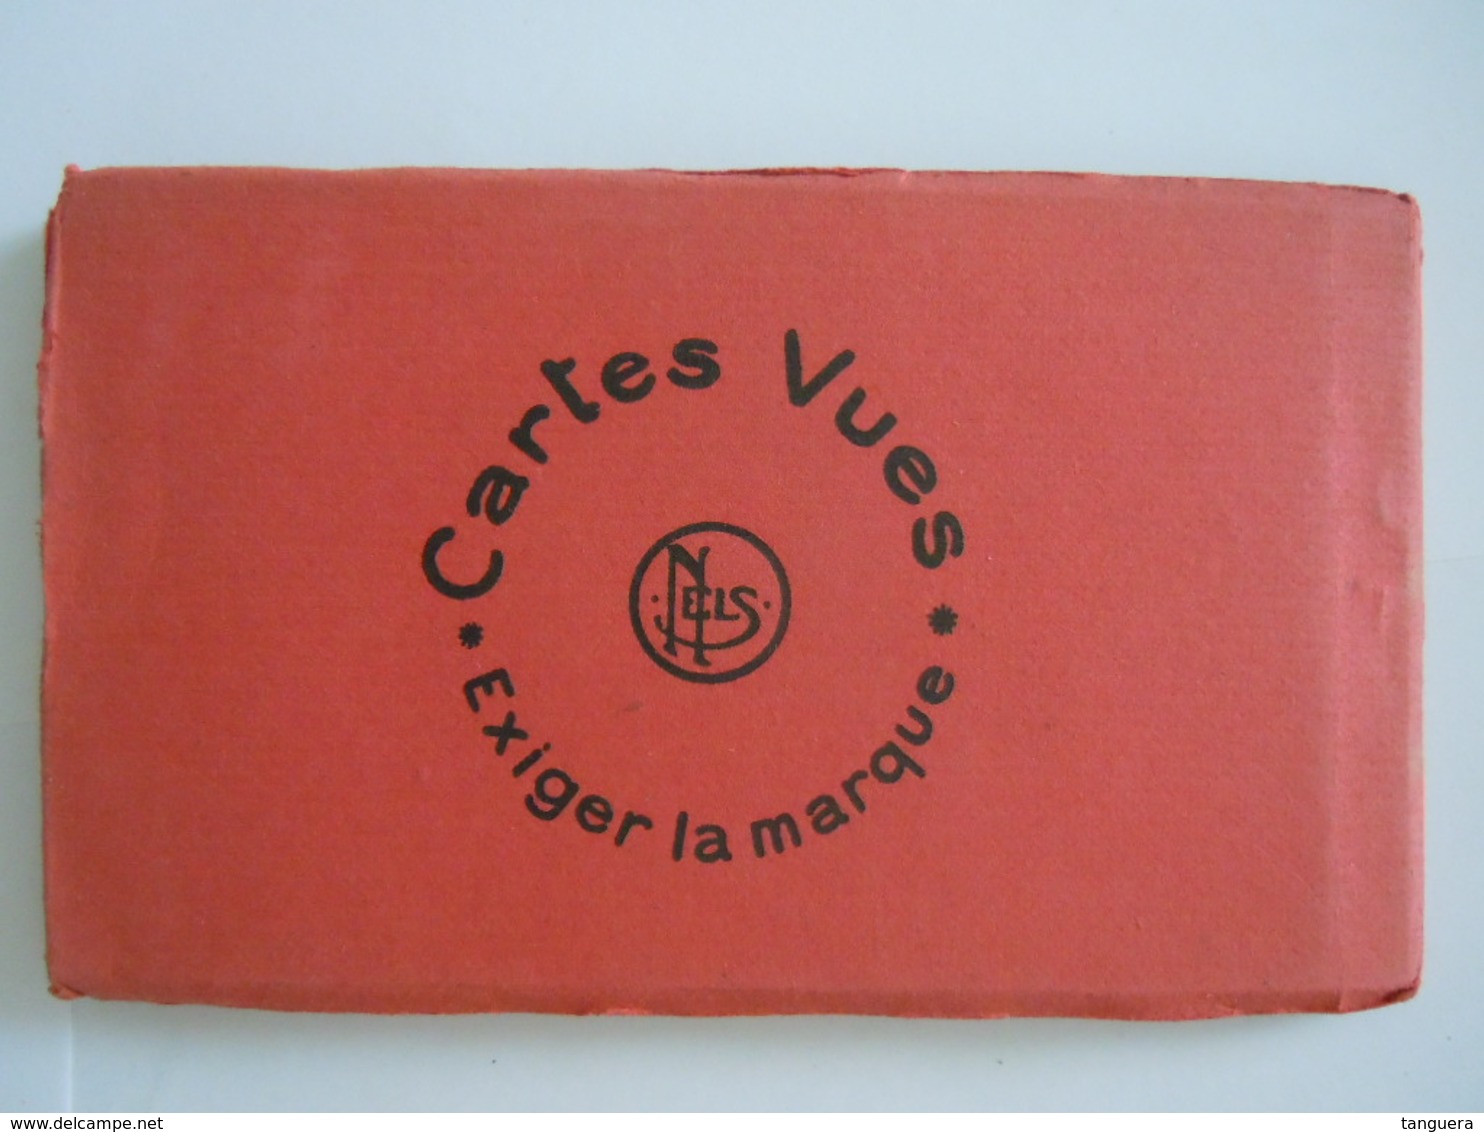 Furnes Veurne 12 cartes-vues detachables zichtkaarten Edit Nels, kaftje beschadigd, couverture carnet abimée